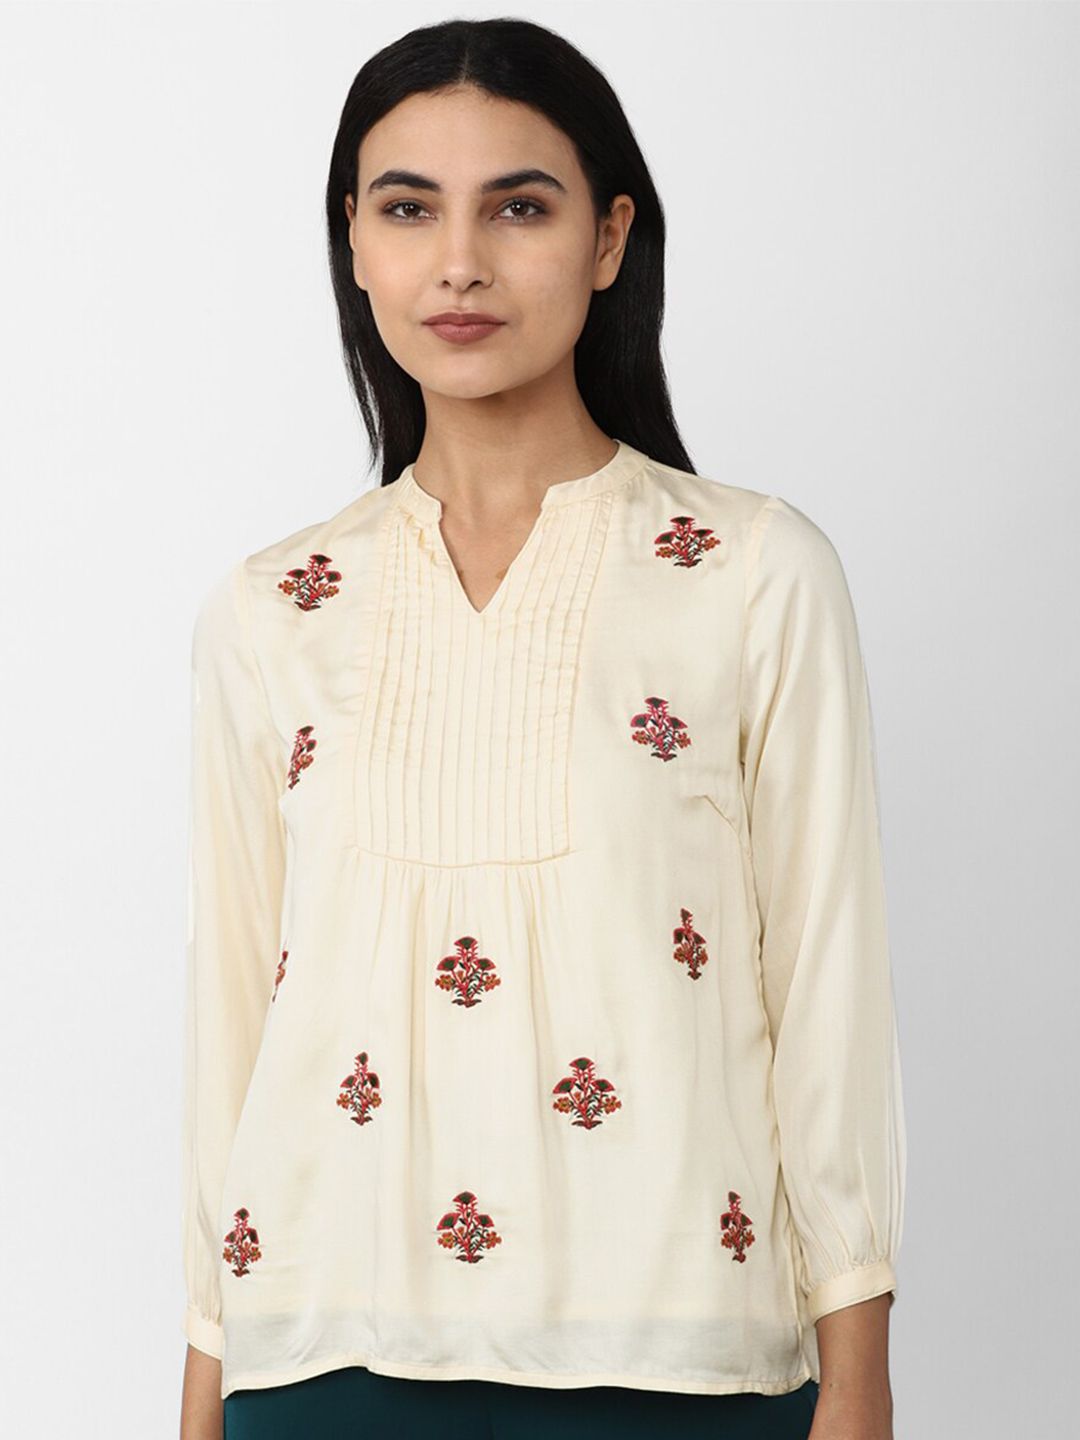 Van Heusen Floral Embroidered Mandarin Collar Top Price in India